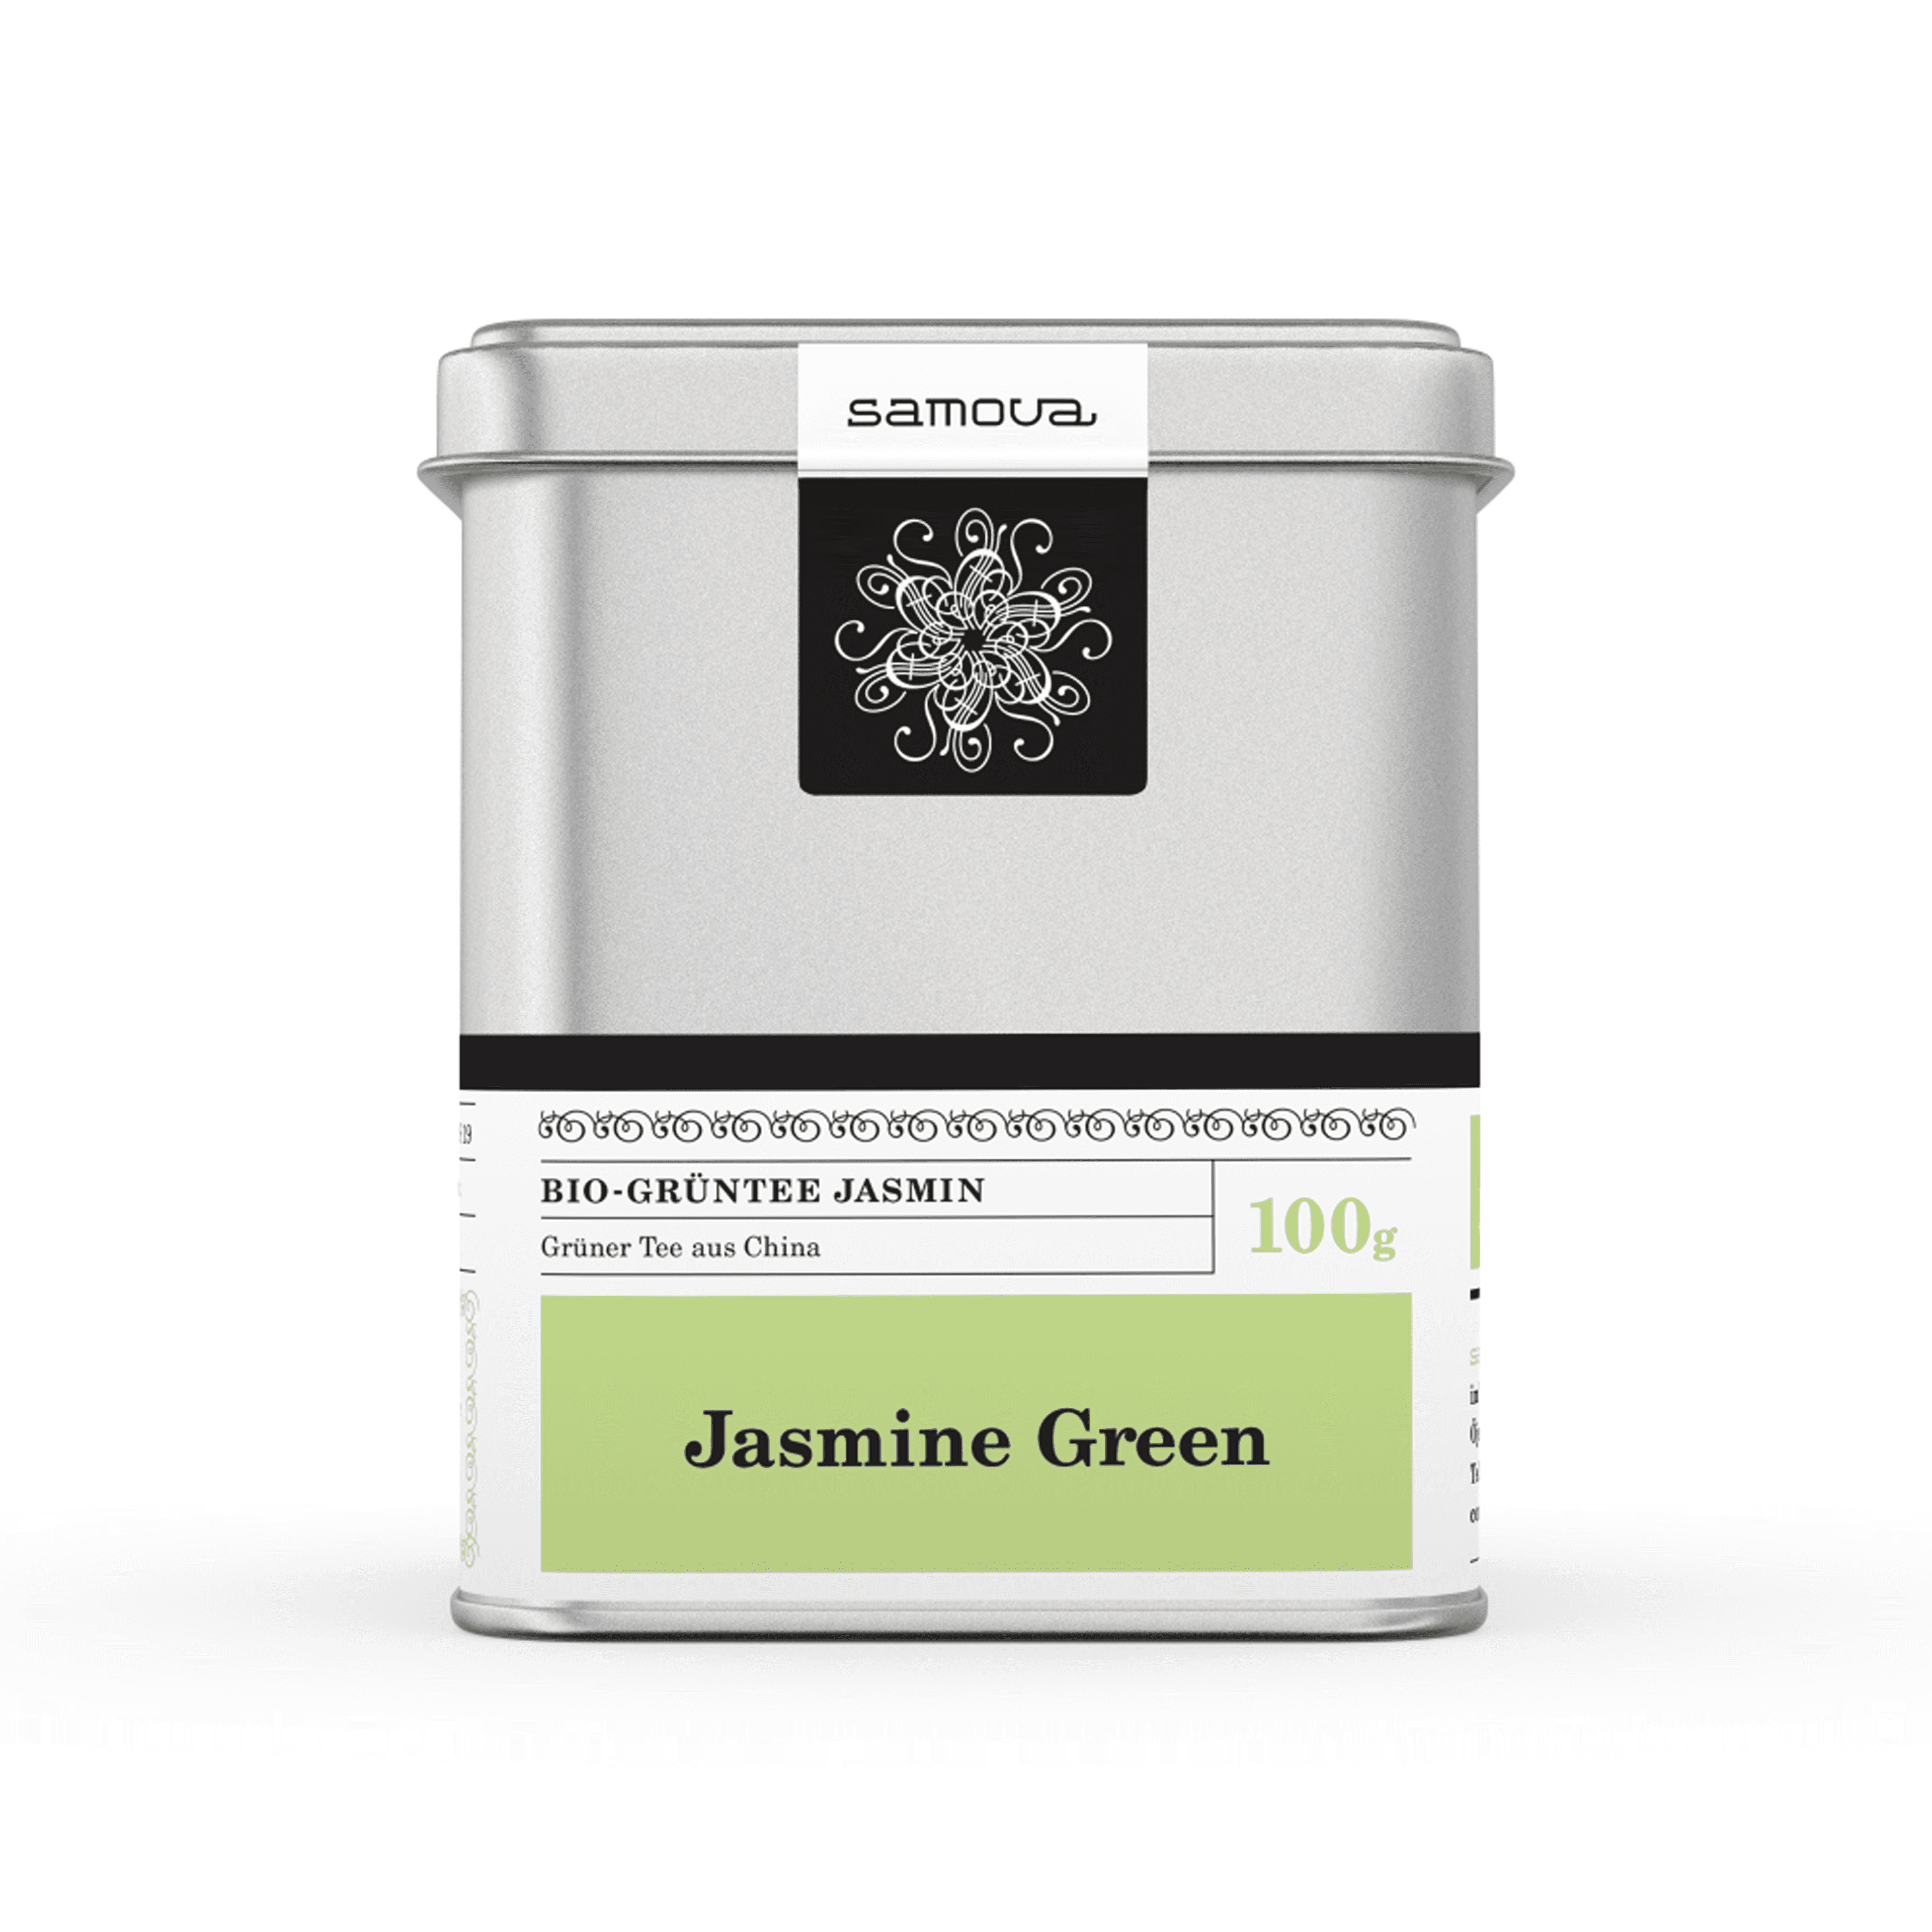 Jar of Jasmine Green tea